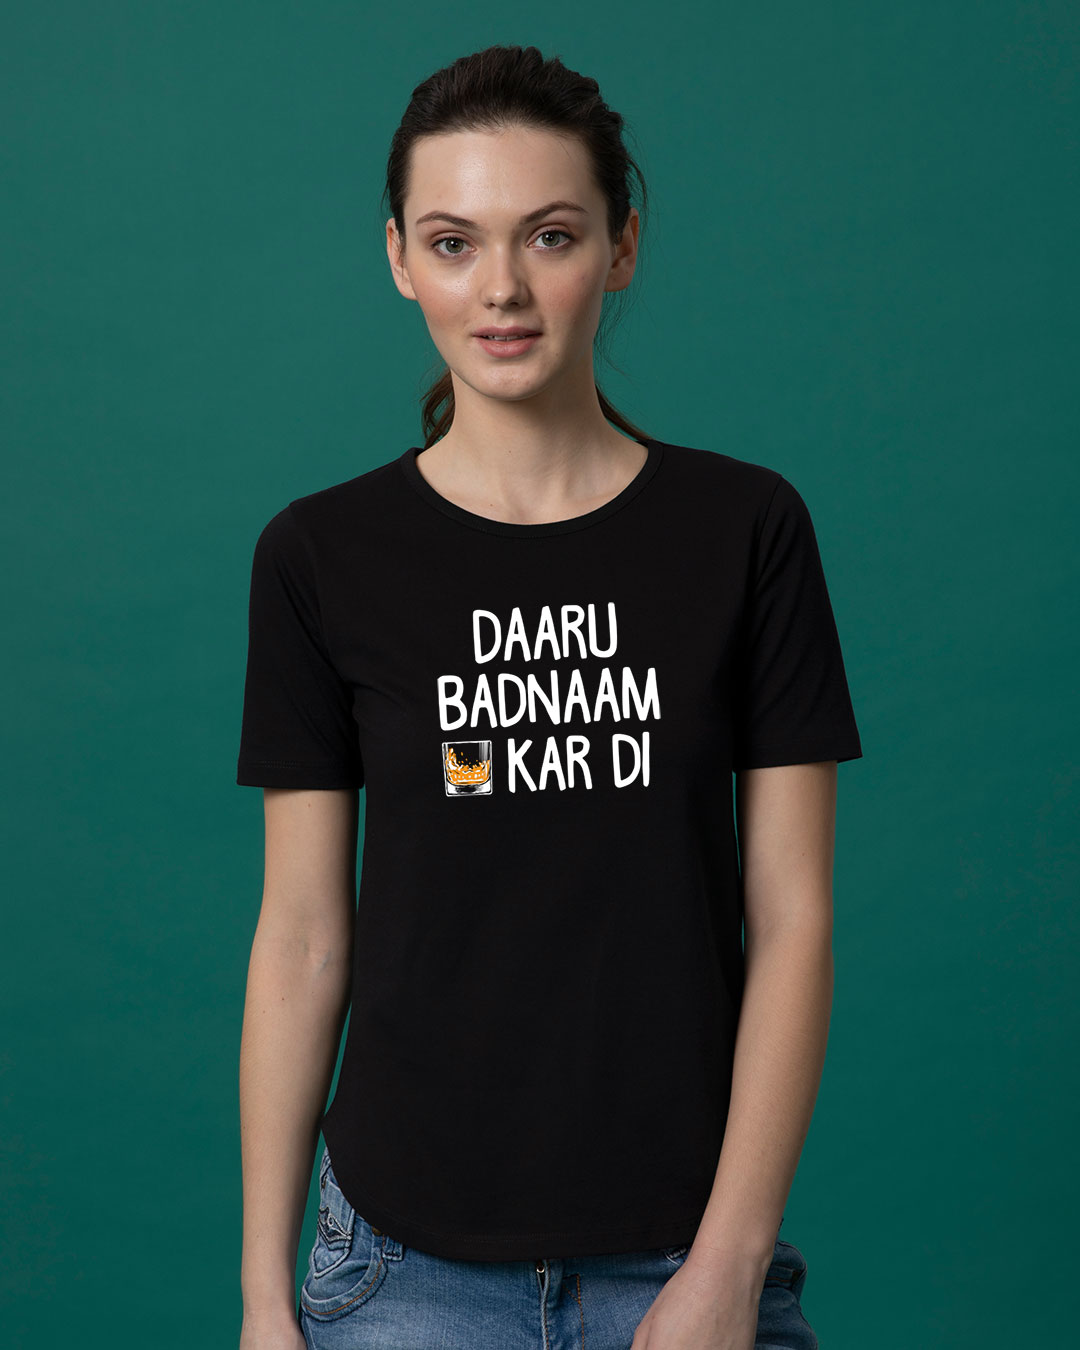 Buy Daaru Badnaam Basic Round Hem T-Shirt for Women black Online at ...